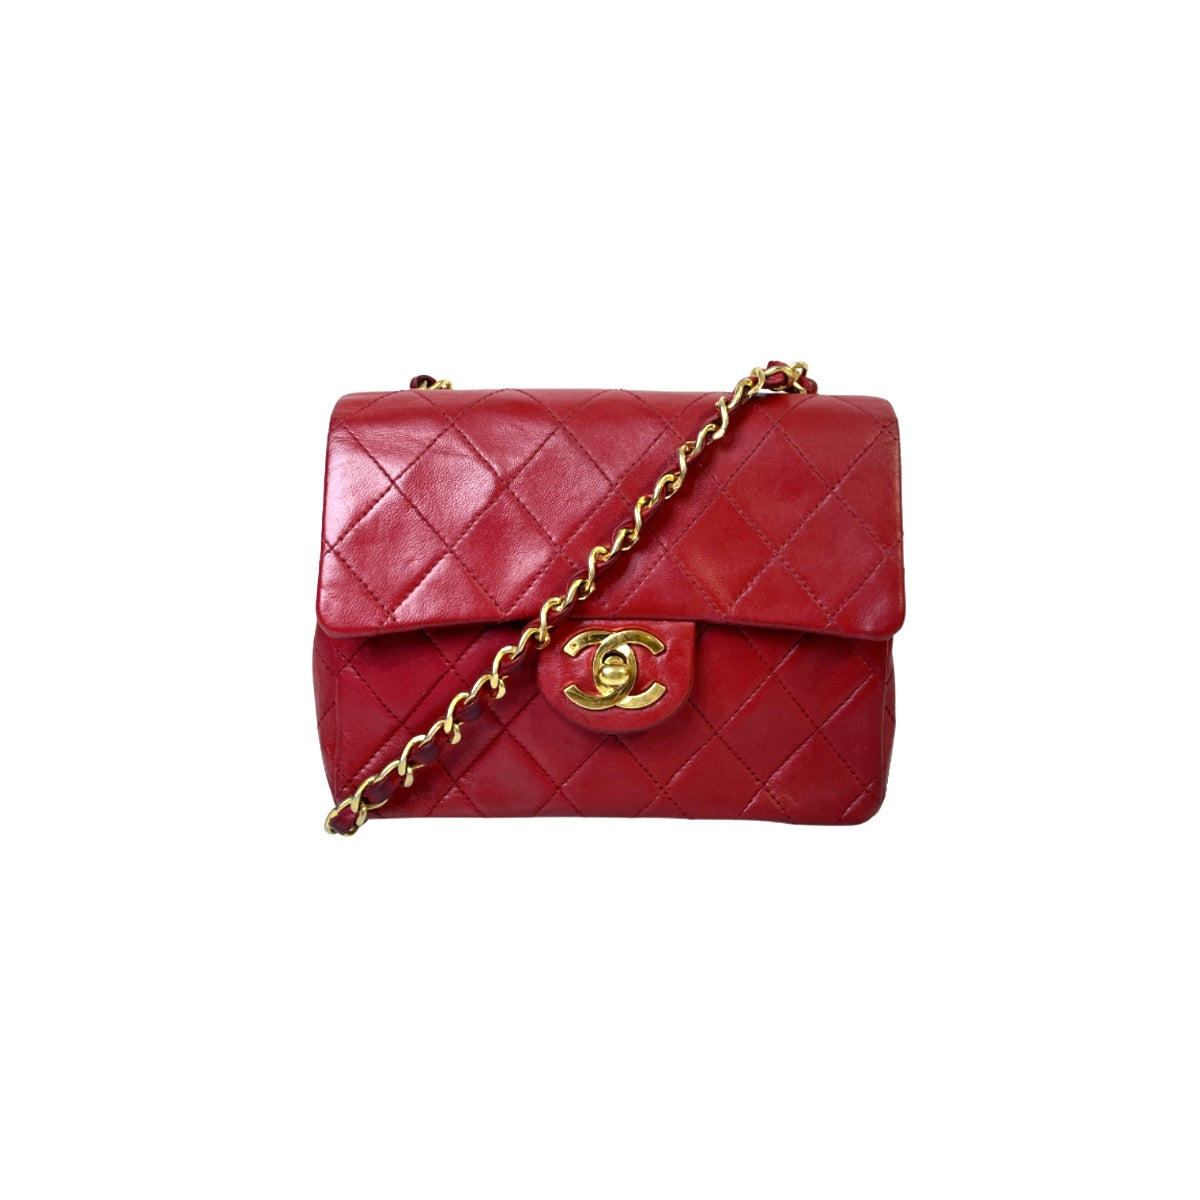 vintage chanel bag  Chanel bag, Chanel classic flap bag, Chanel